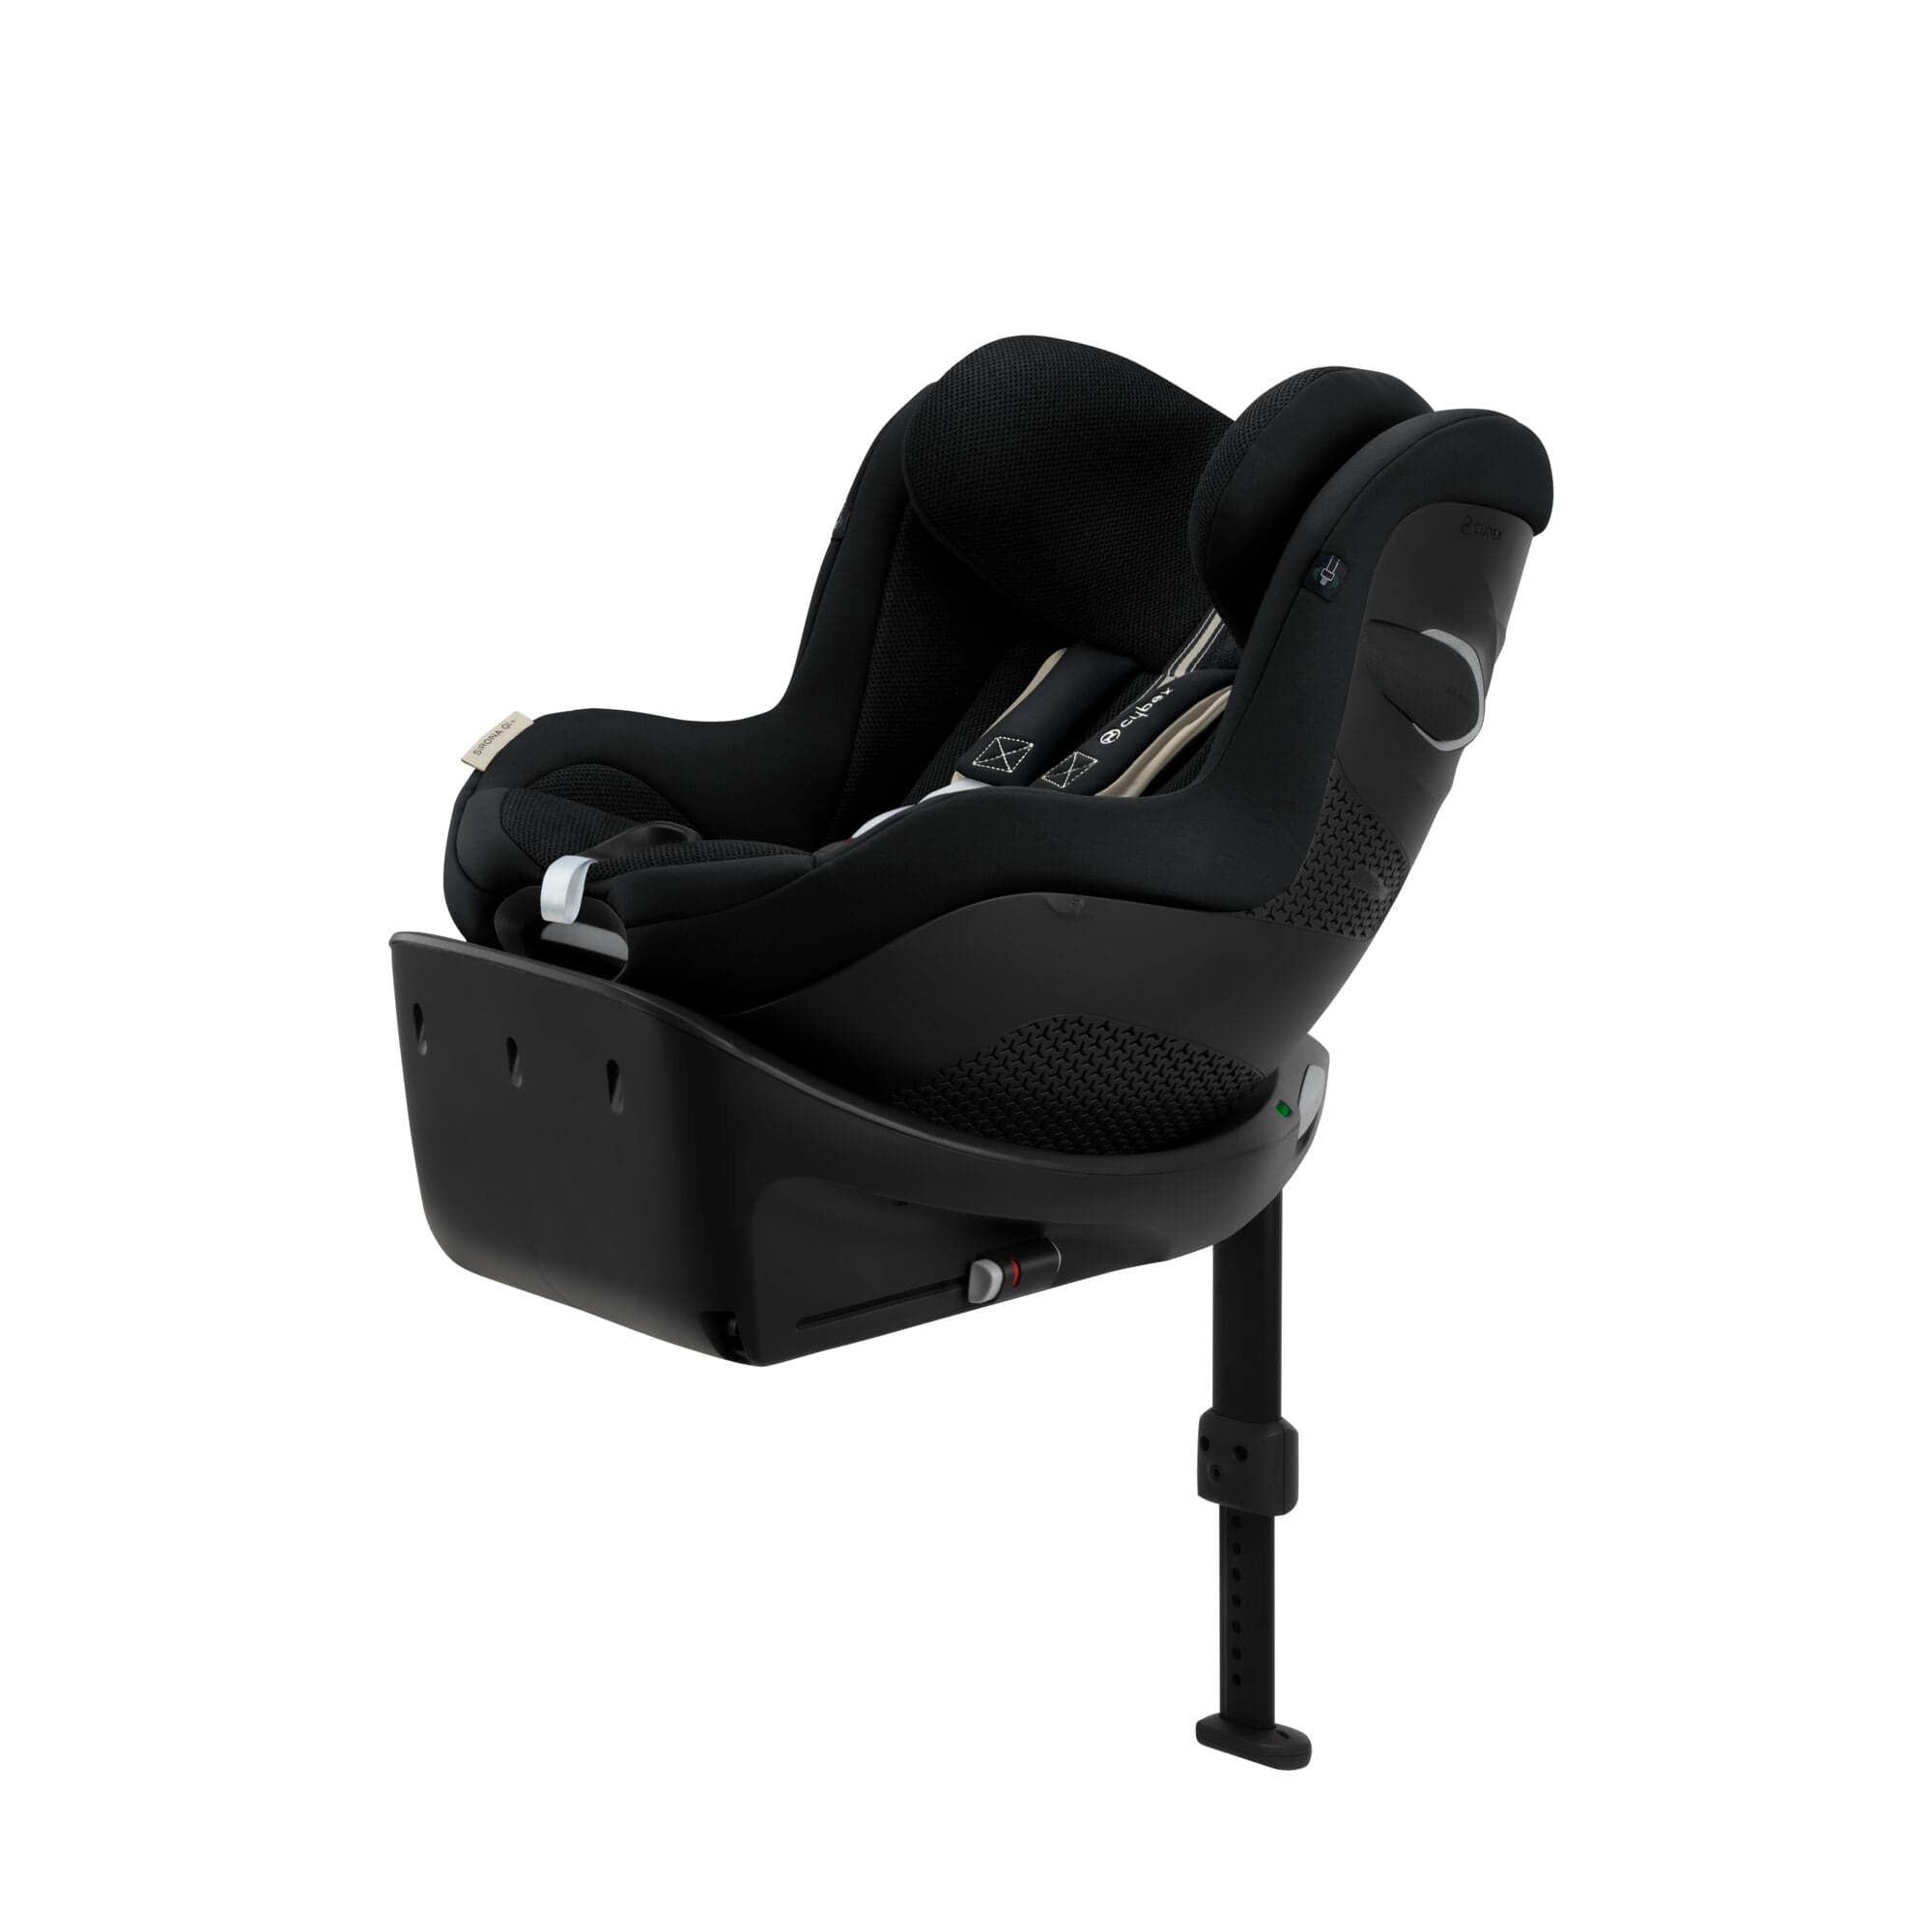 Cybex Car Seat Moon Black - PLUS NEW Cybex Sirona Gi i-Size Car Seat